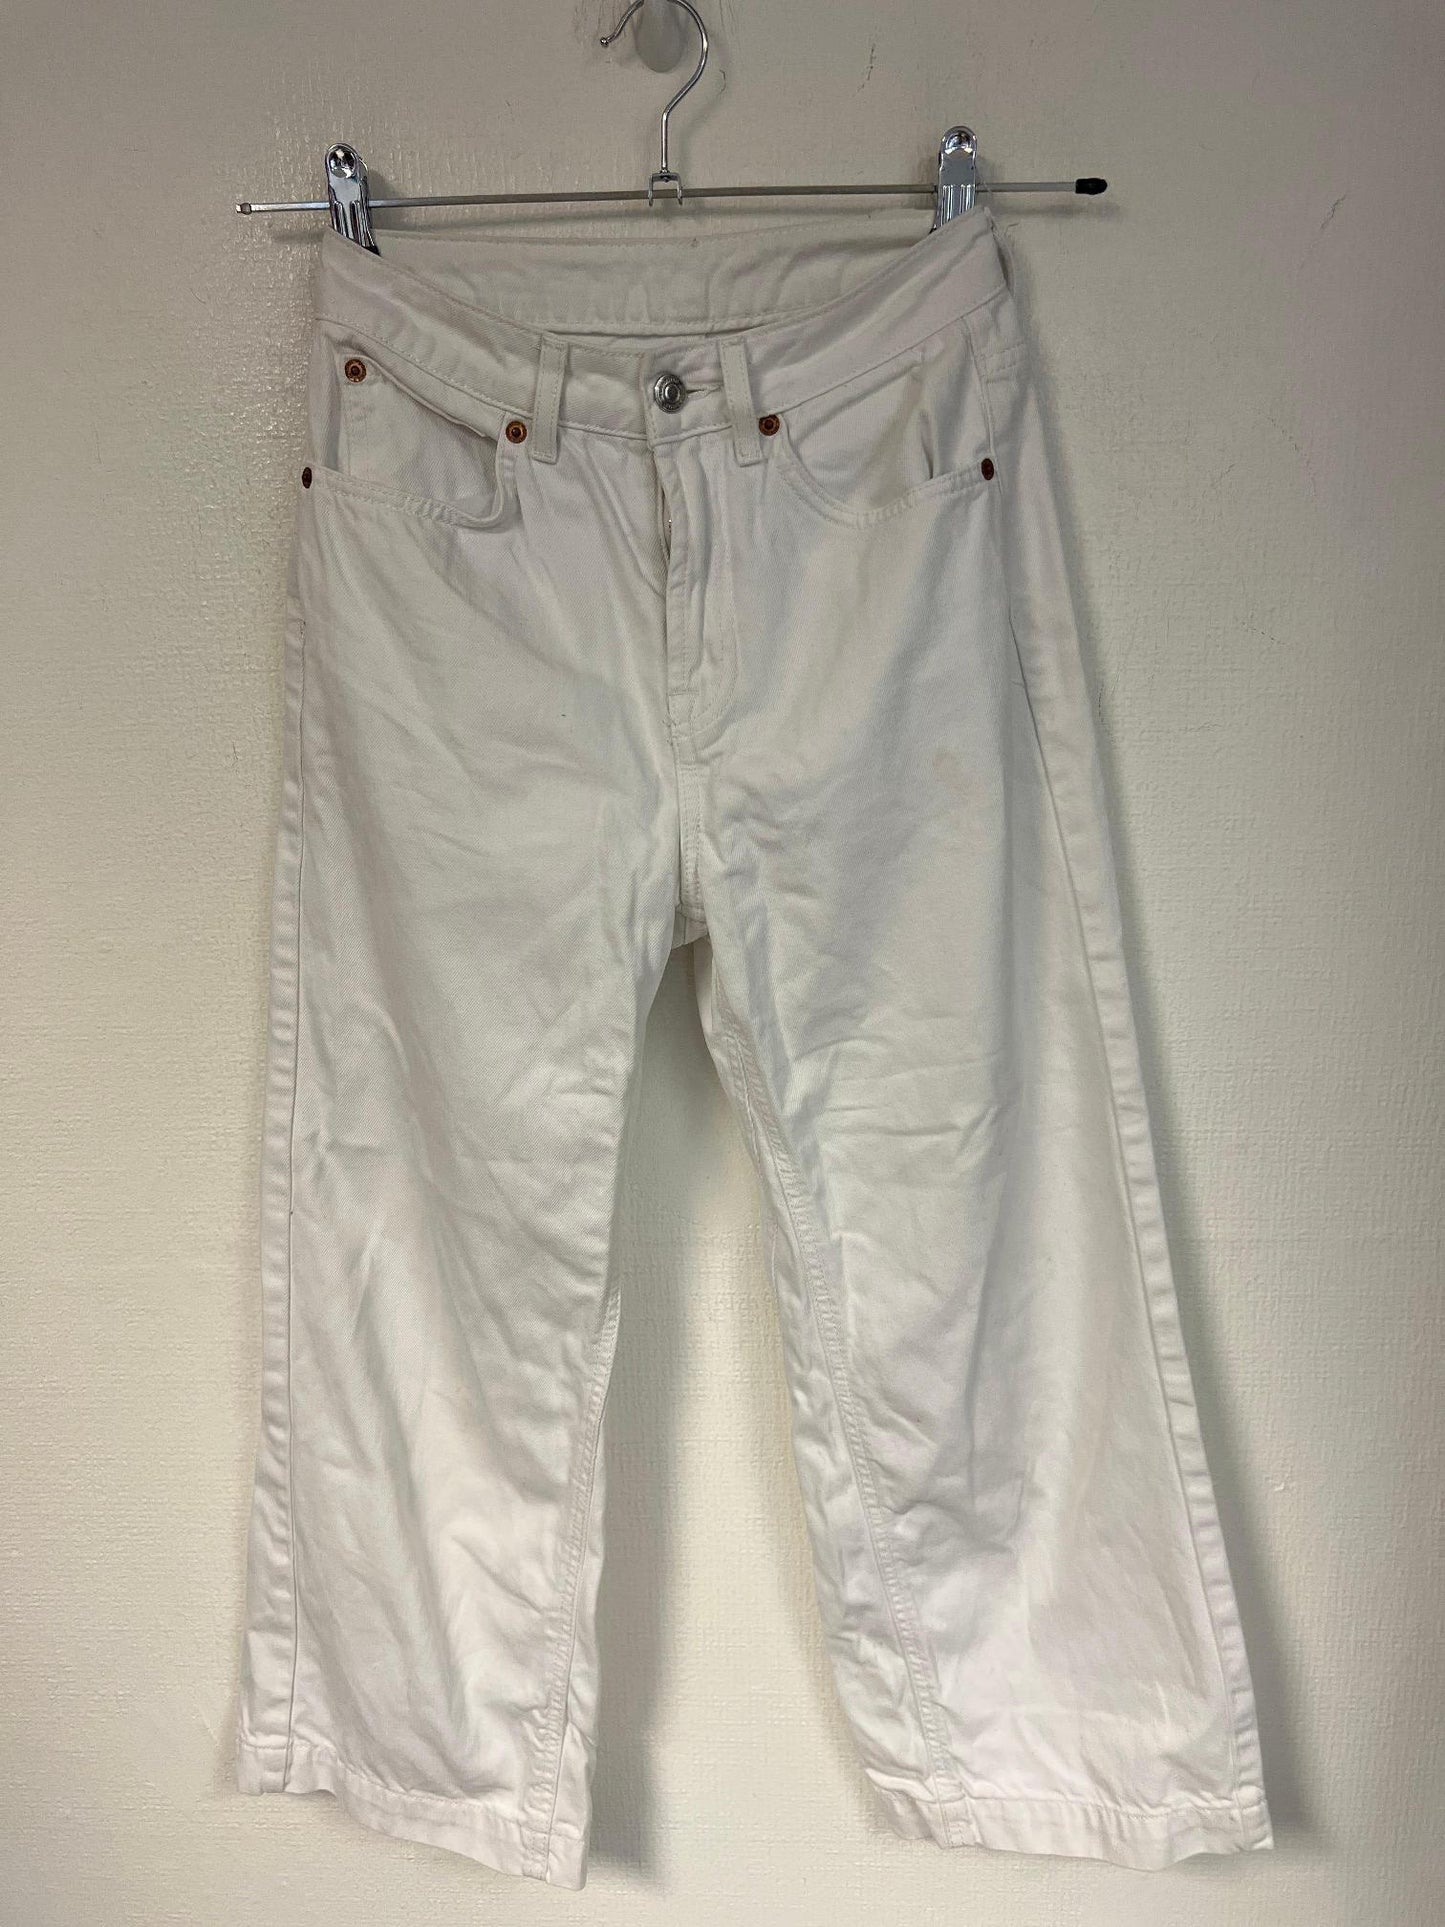 White wide leg jeans, size 6/8 - Damaged Item Sale